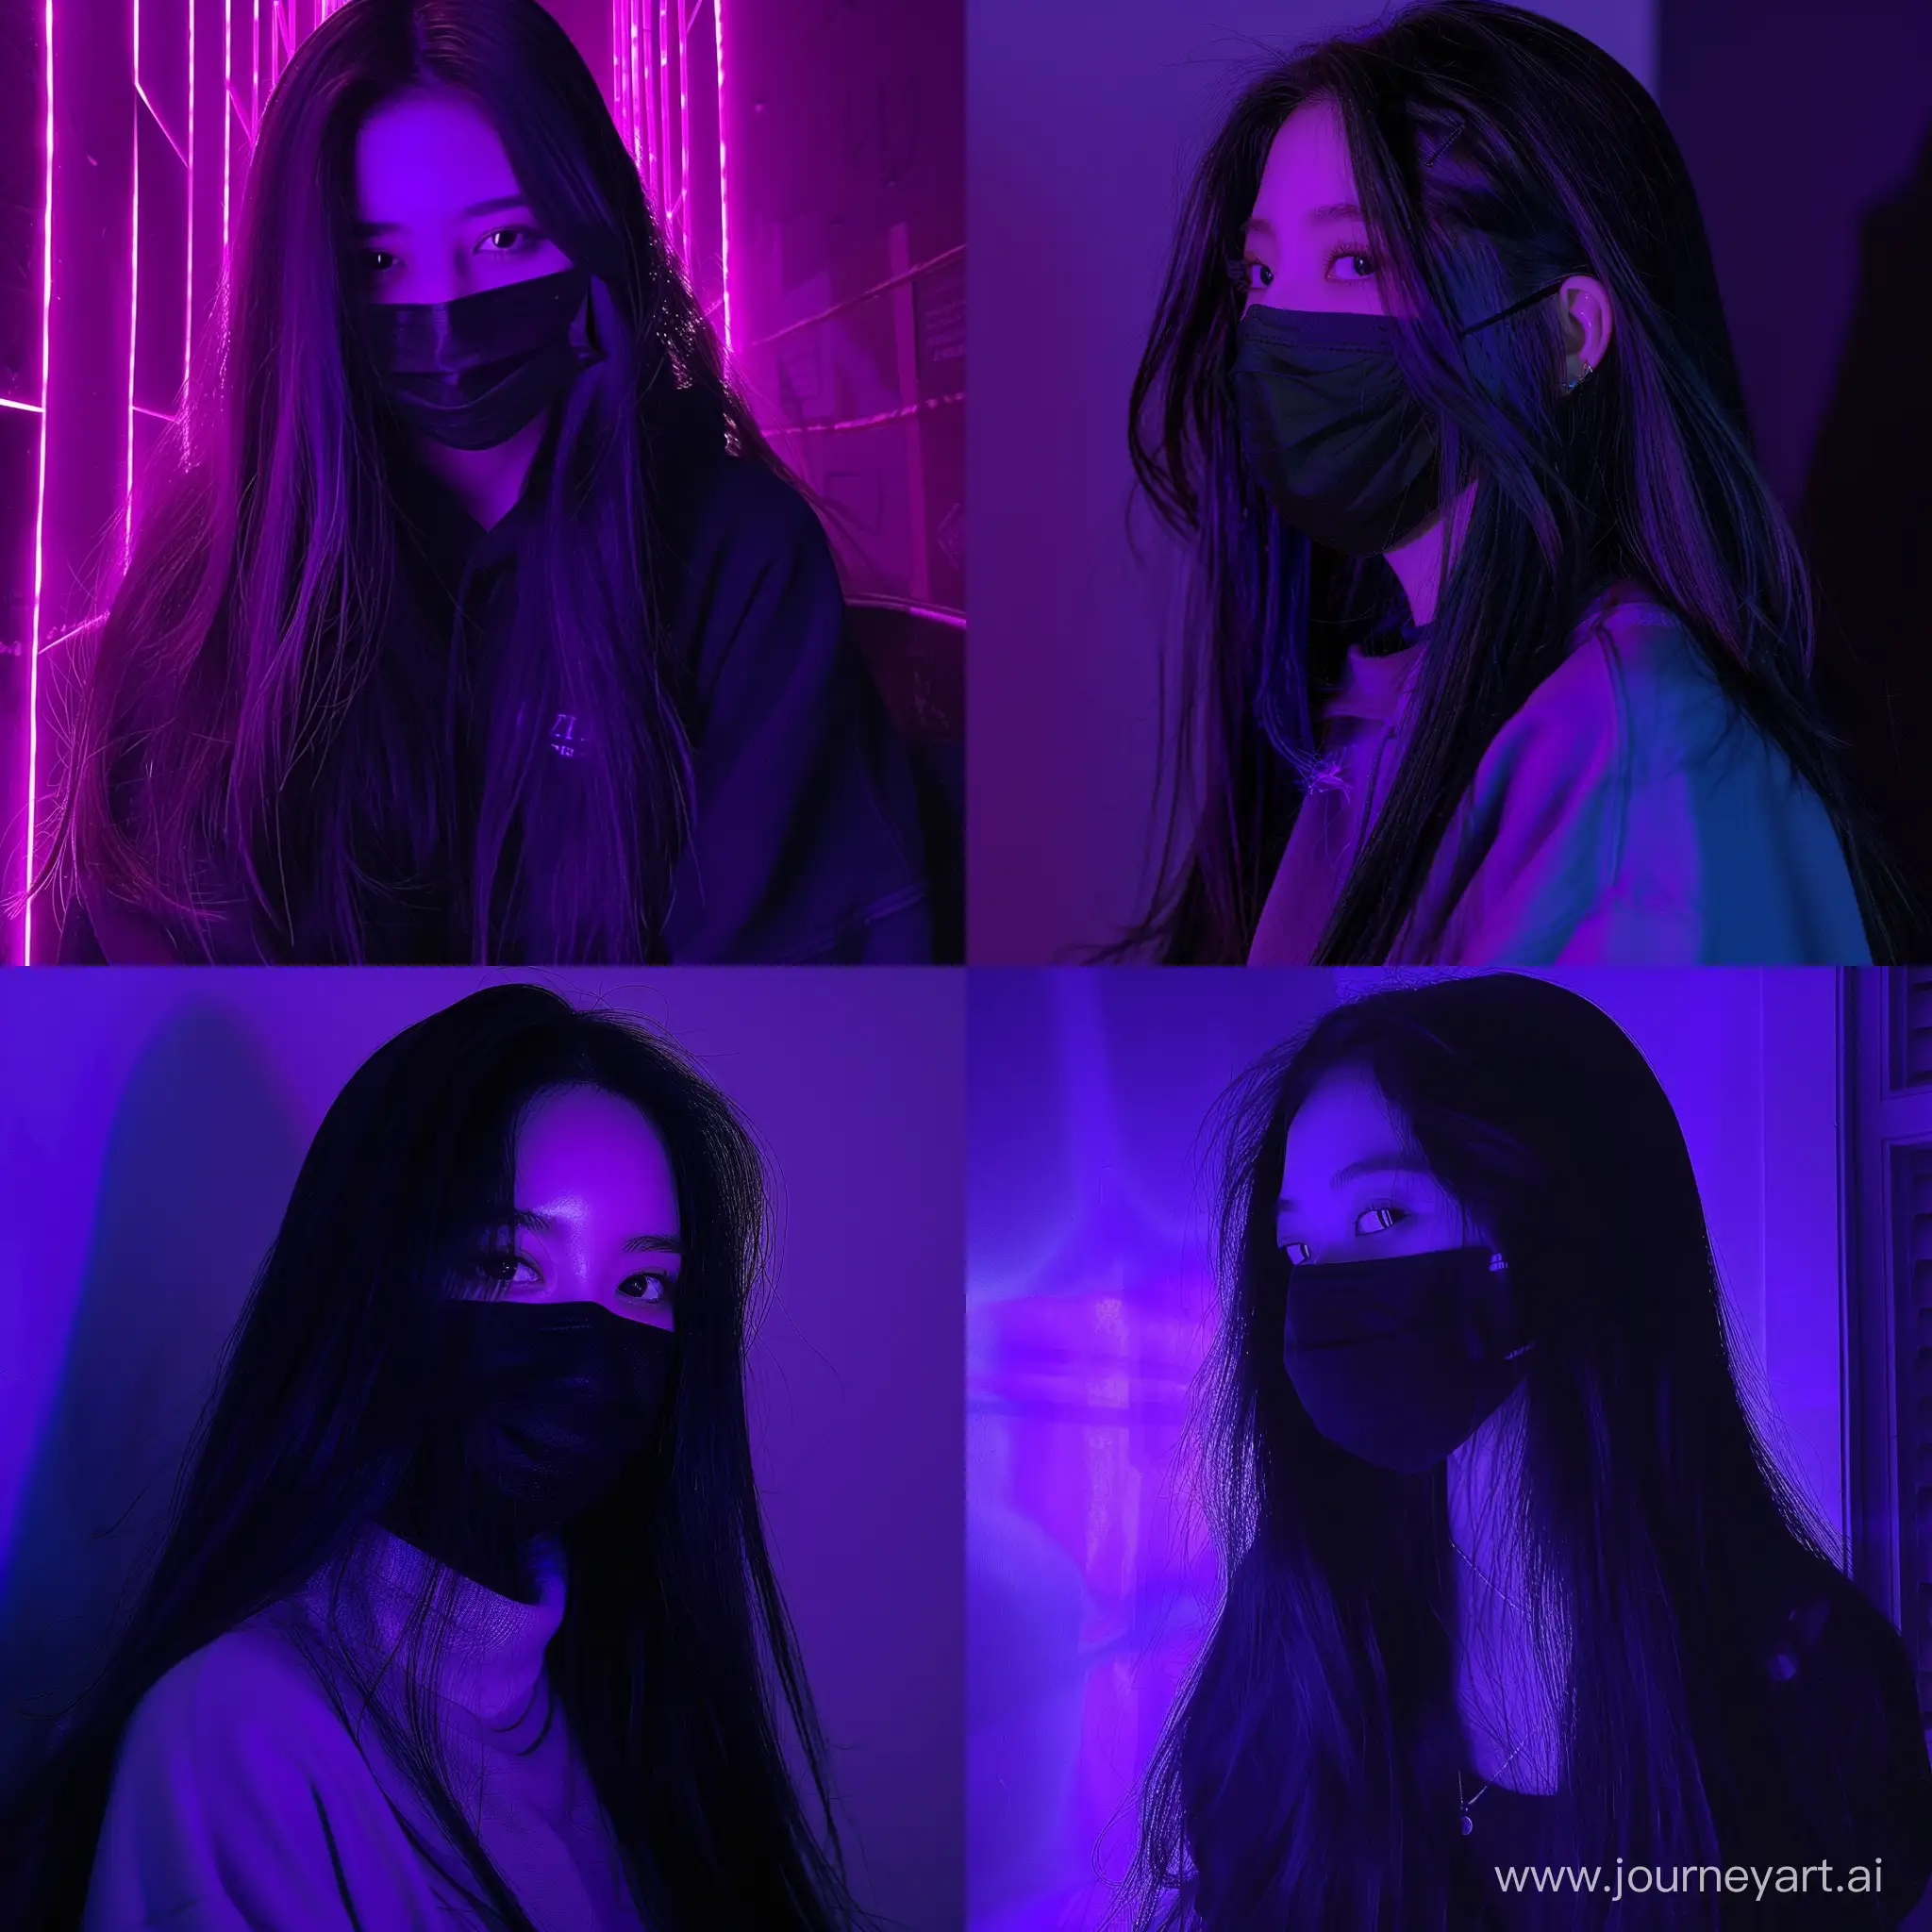 Aesthetic instagram pfp girl with long black hair in a purple lighting dark room wearing a black facemask